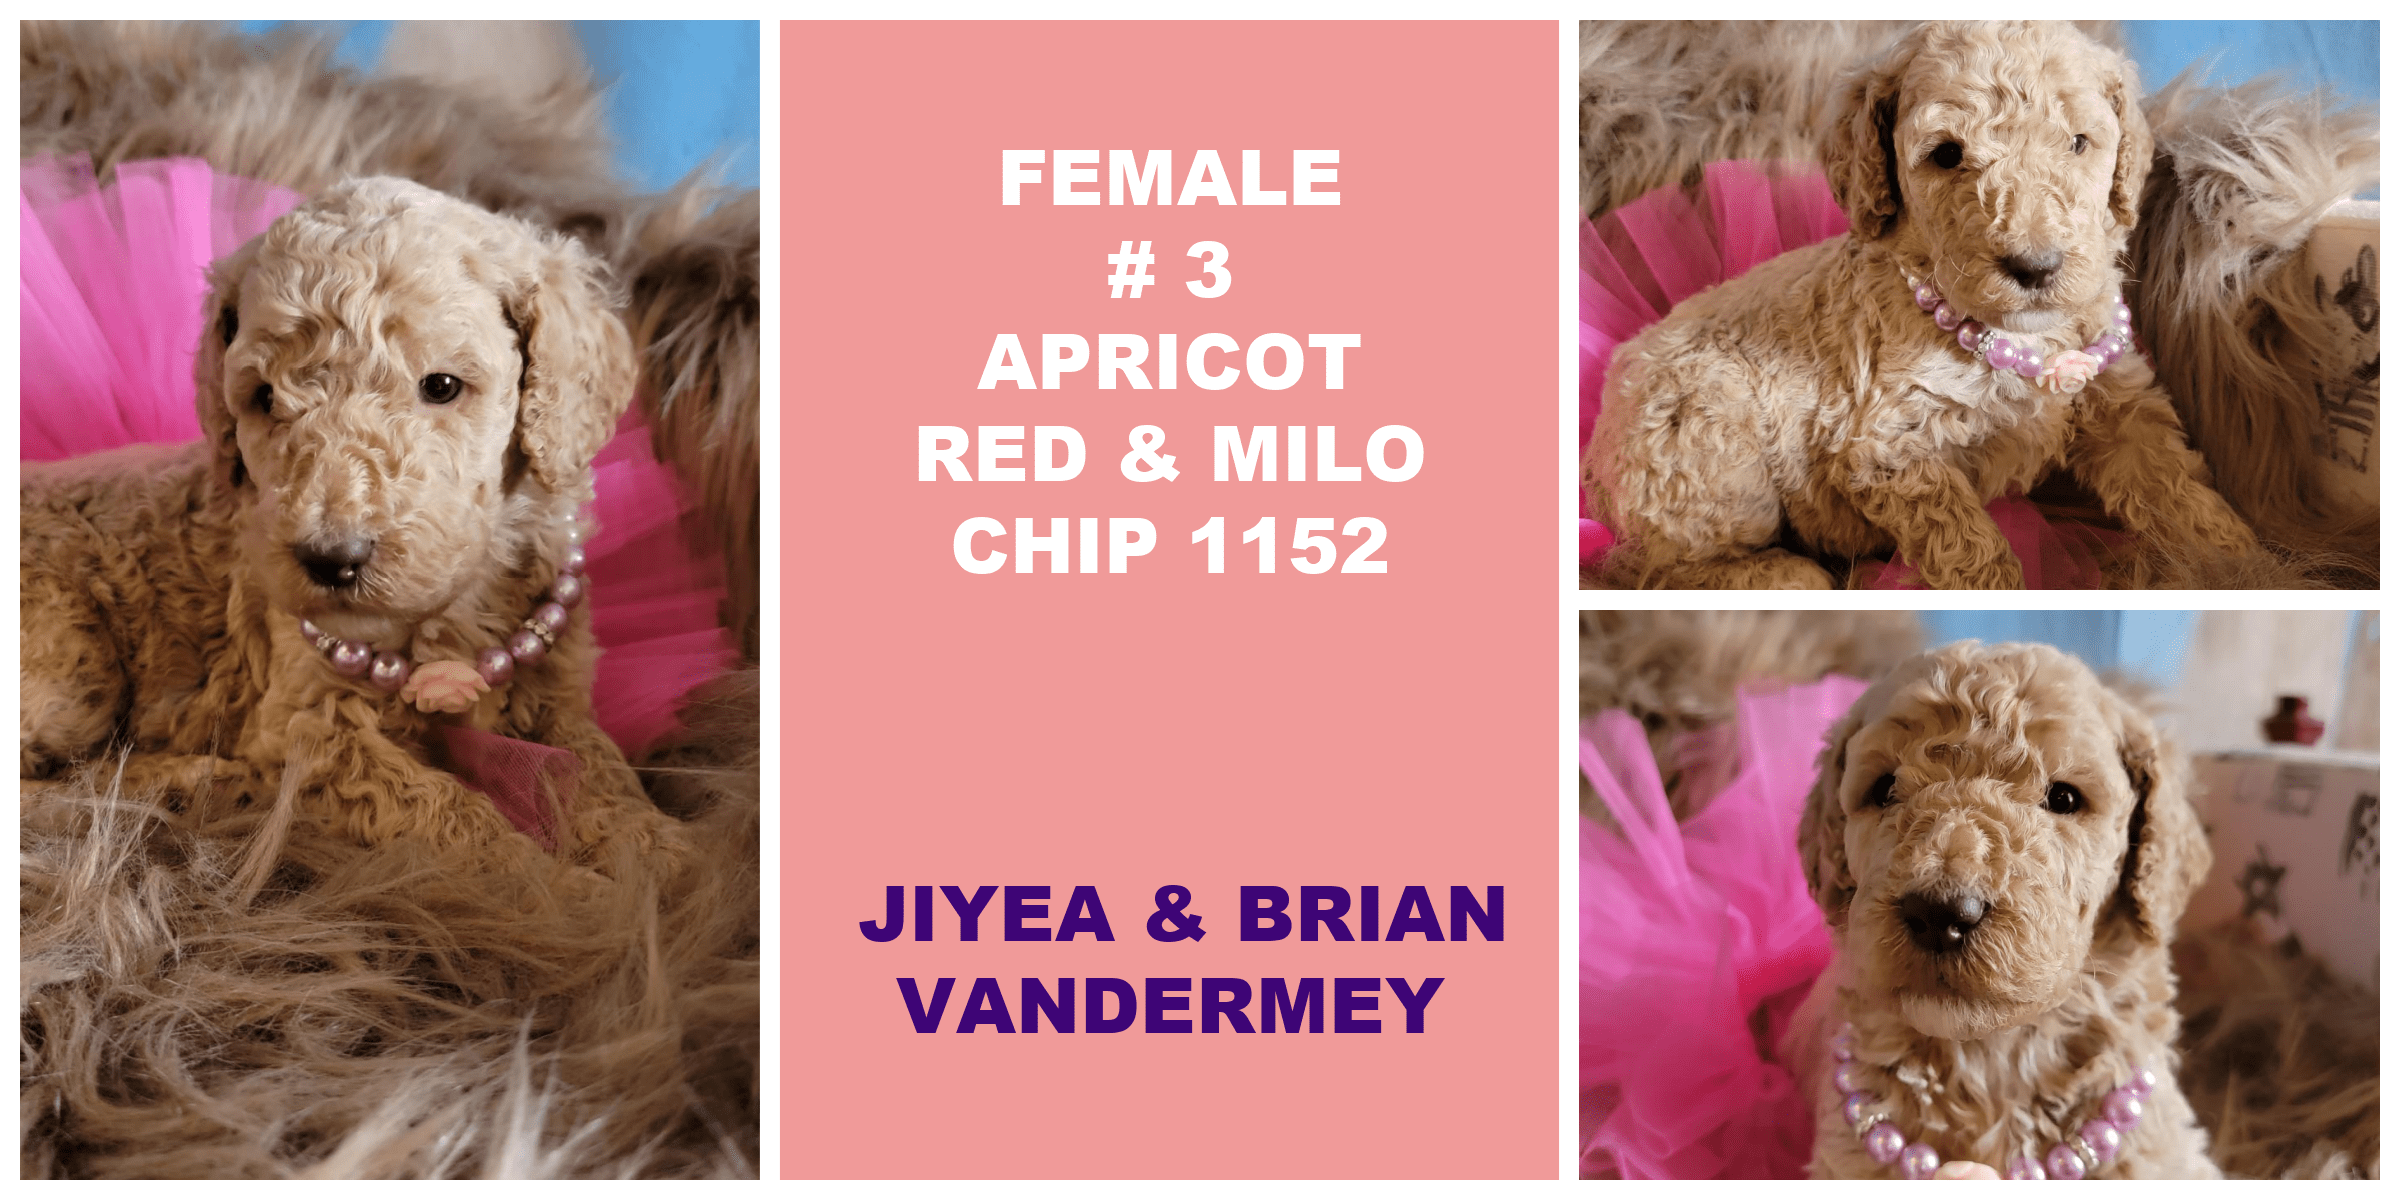 FEMALE 3 APRICOT RED MILO CHIP 1152 JIYEA BRIAN VANDERMEY